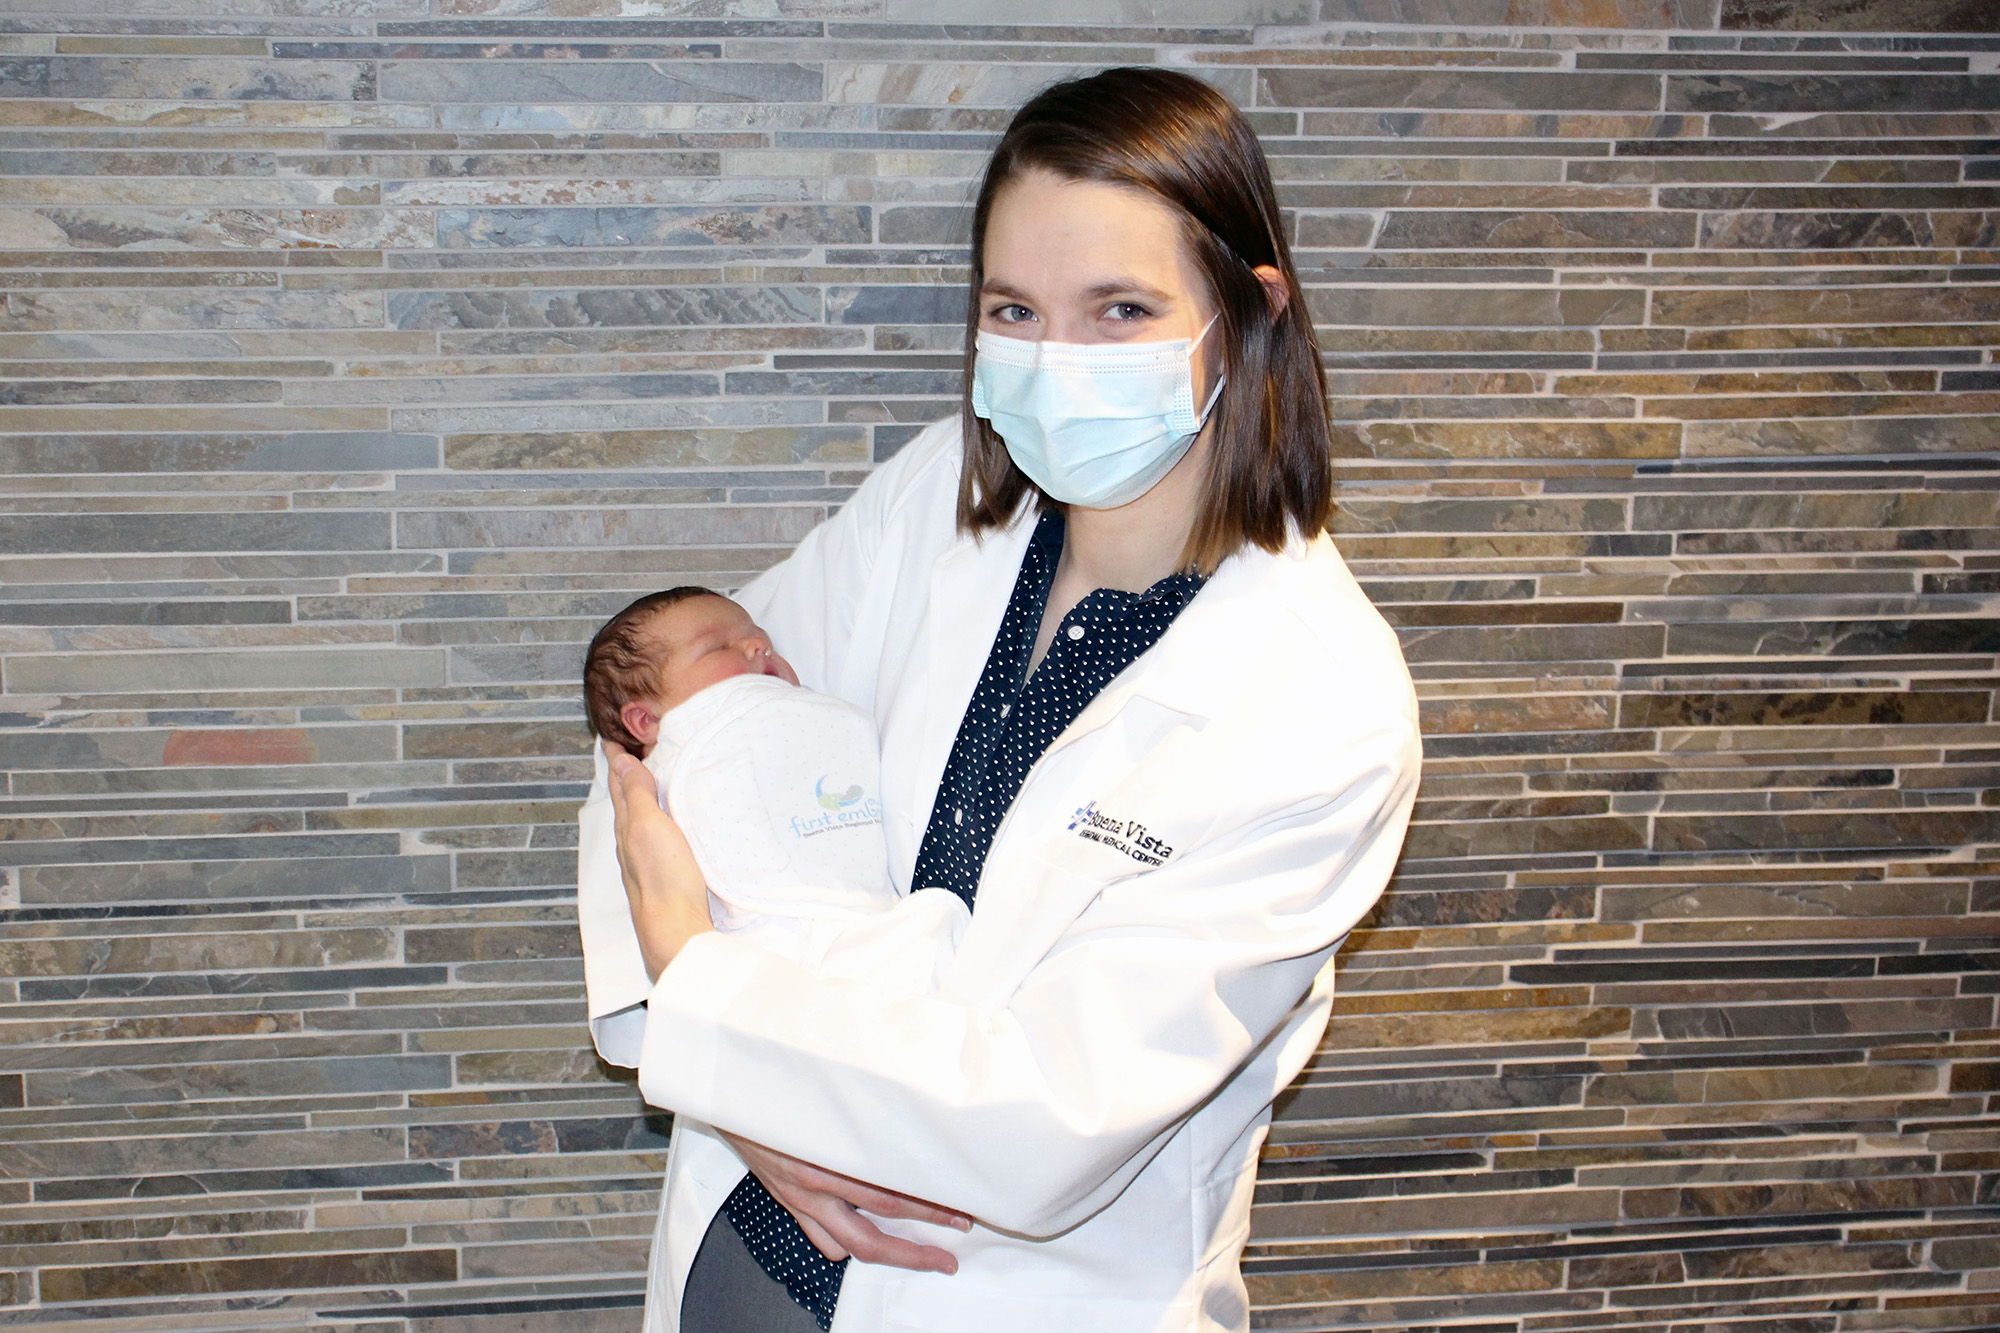 University of Iowa alum Liz Dupic holds a newborn baby